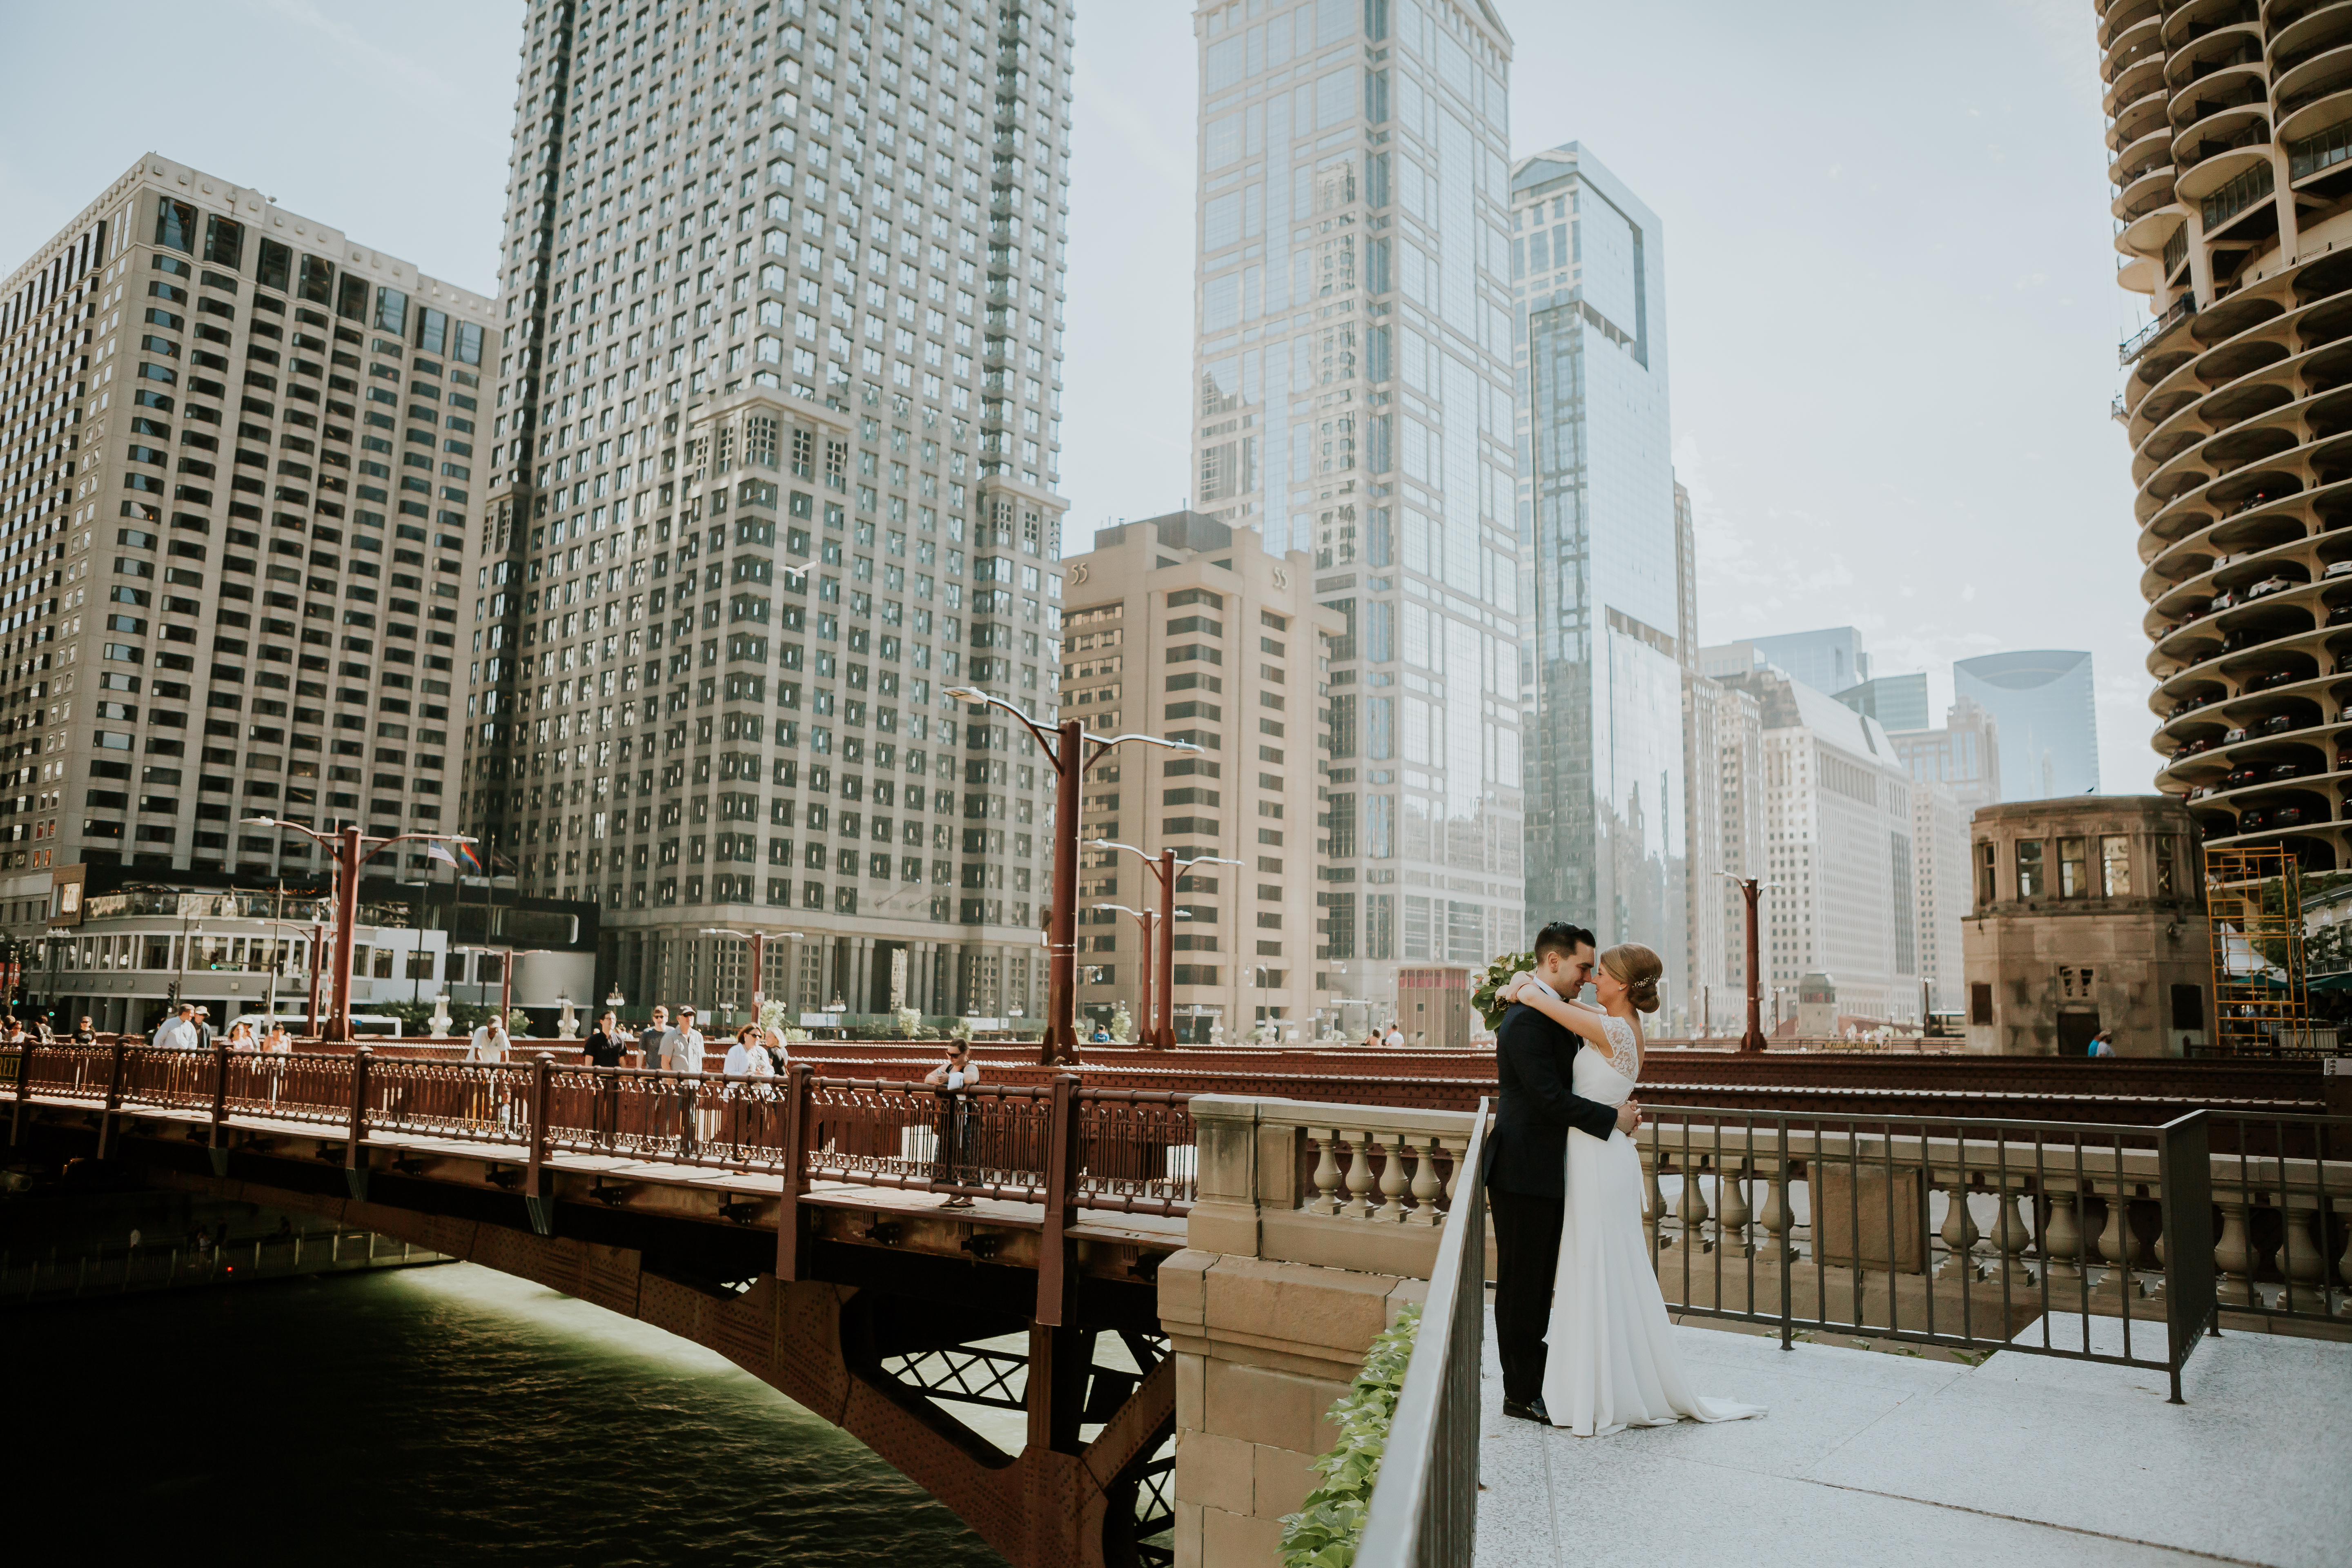 Chicago couple on wedding day at State Street bridge